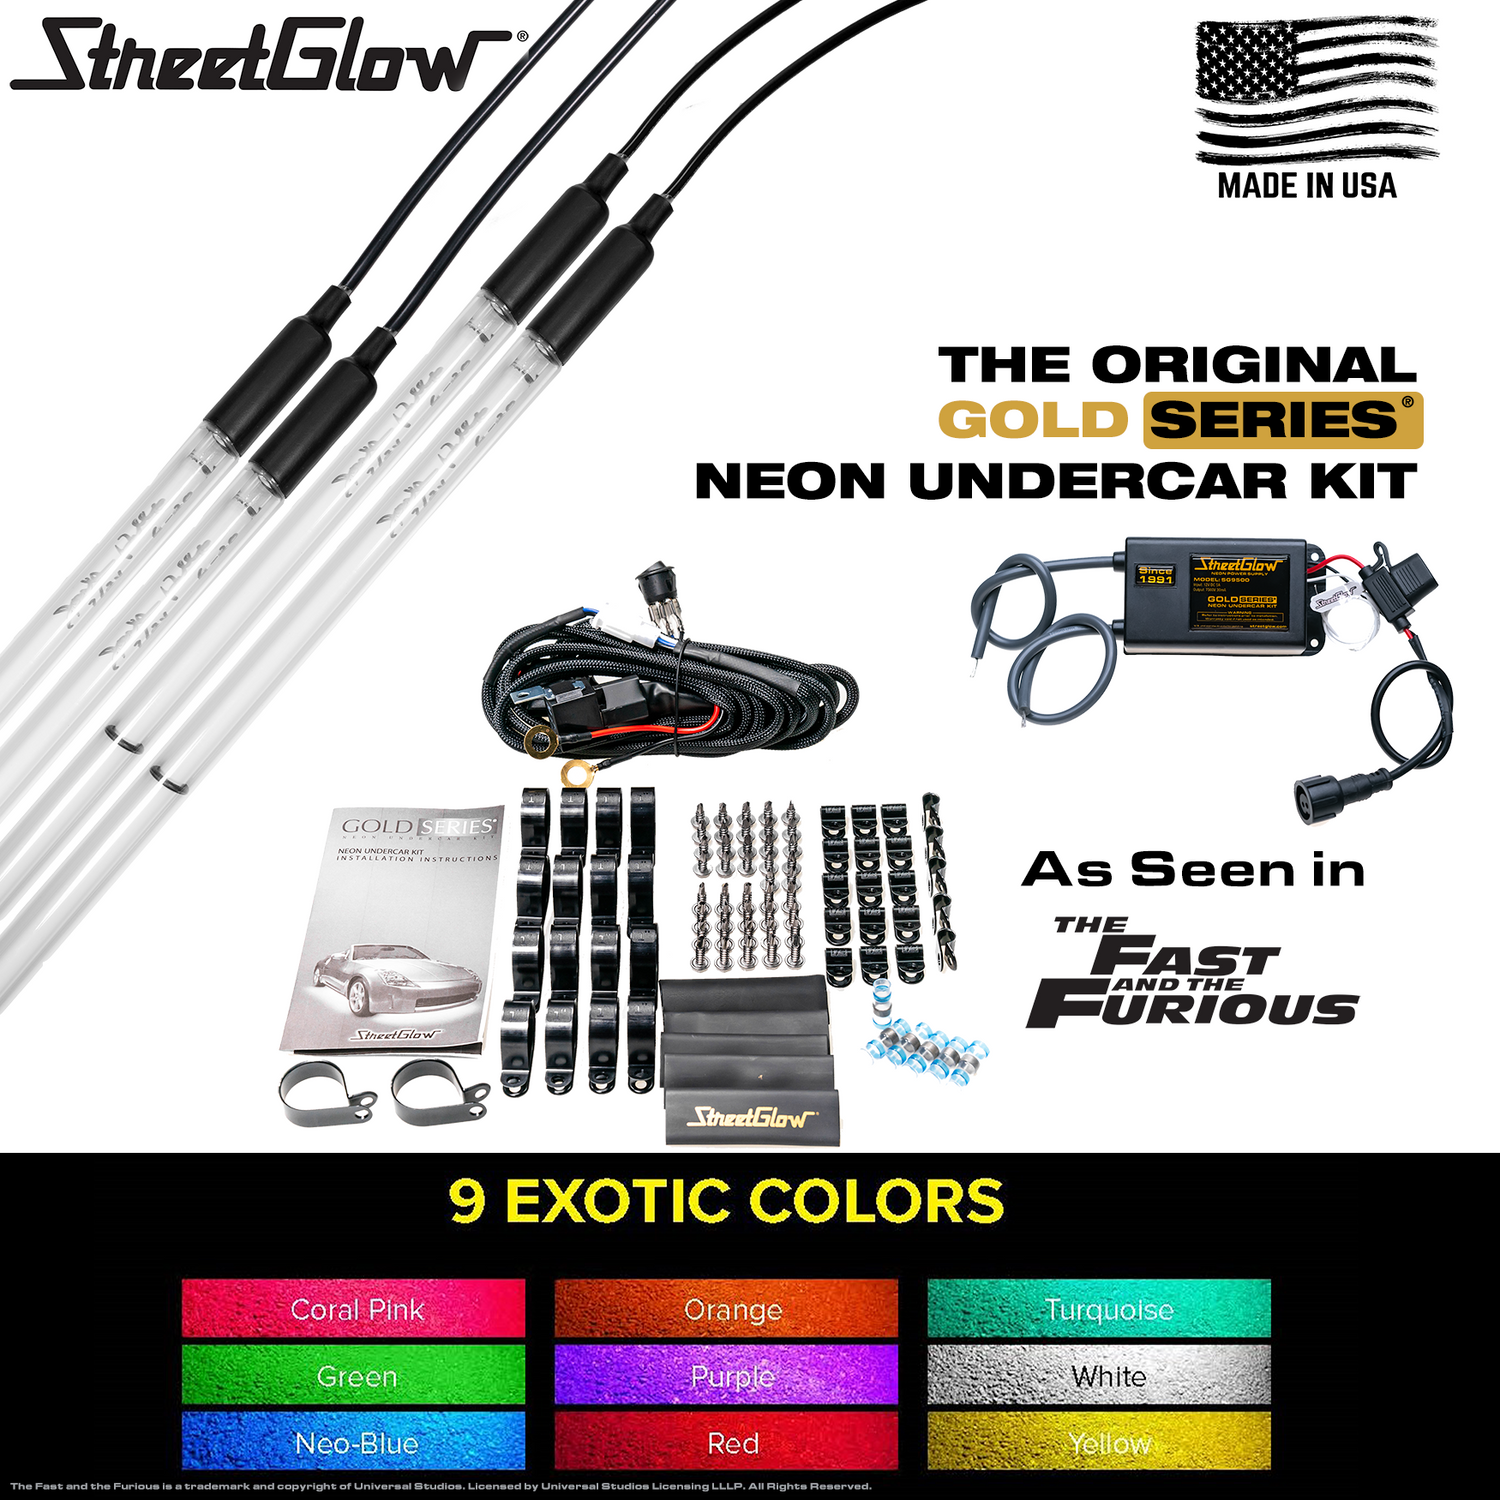 The Original Gold Series Neon Undercar Kit